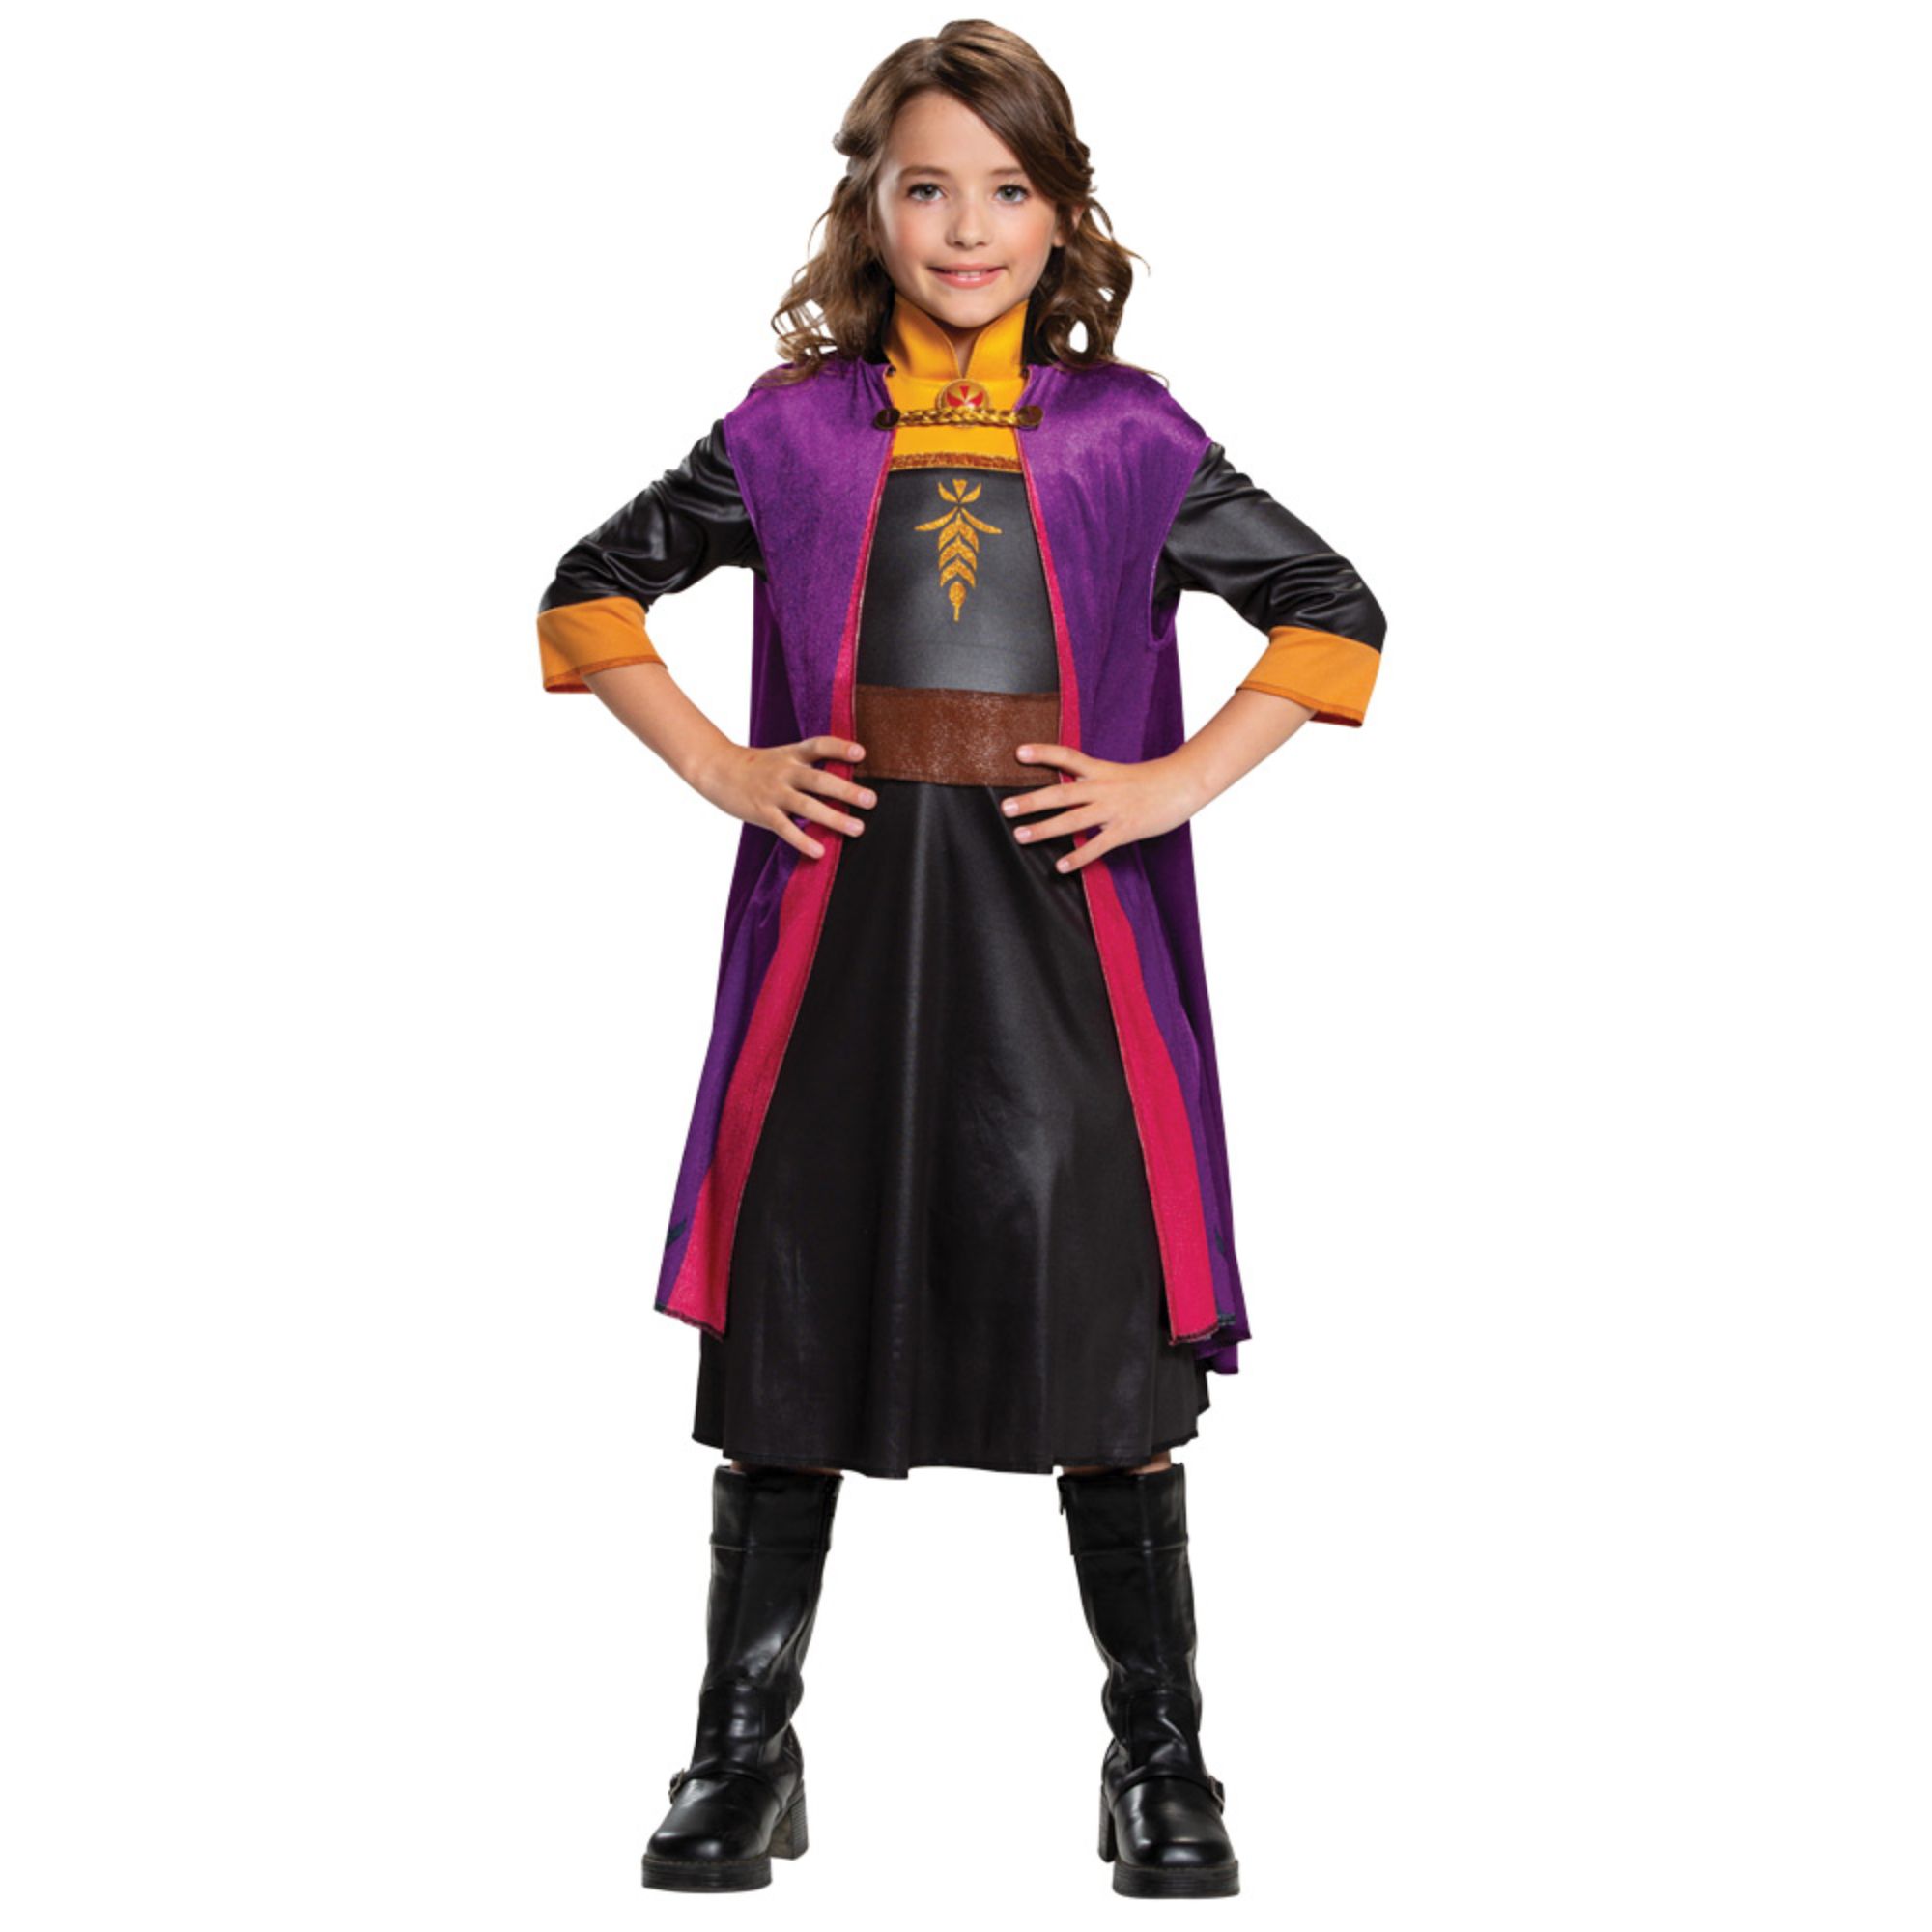 The Costume Center Black and Purple Frozen Anna Girl Child Halloween Costume - Small